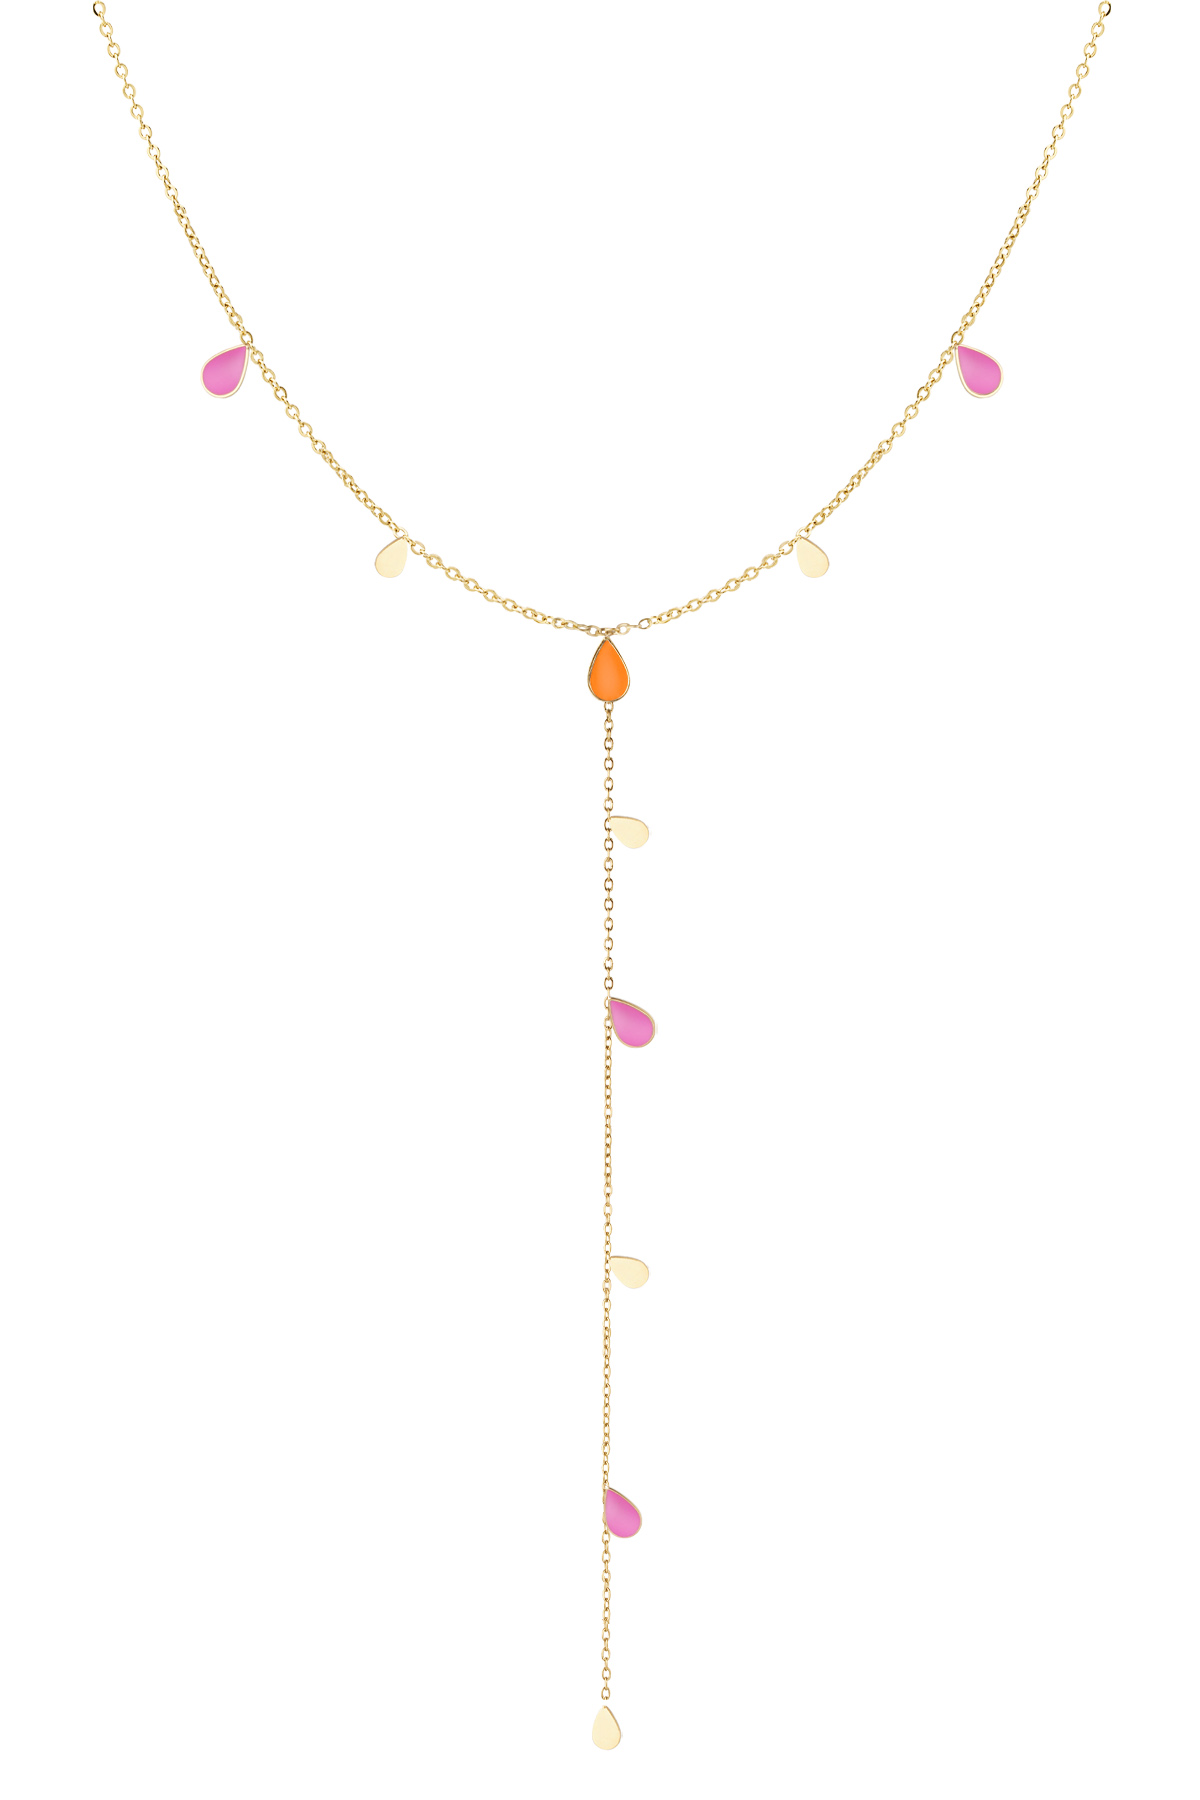 Long necklace enamel drop - orange pink